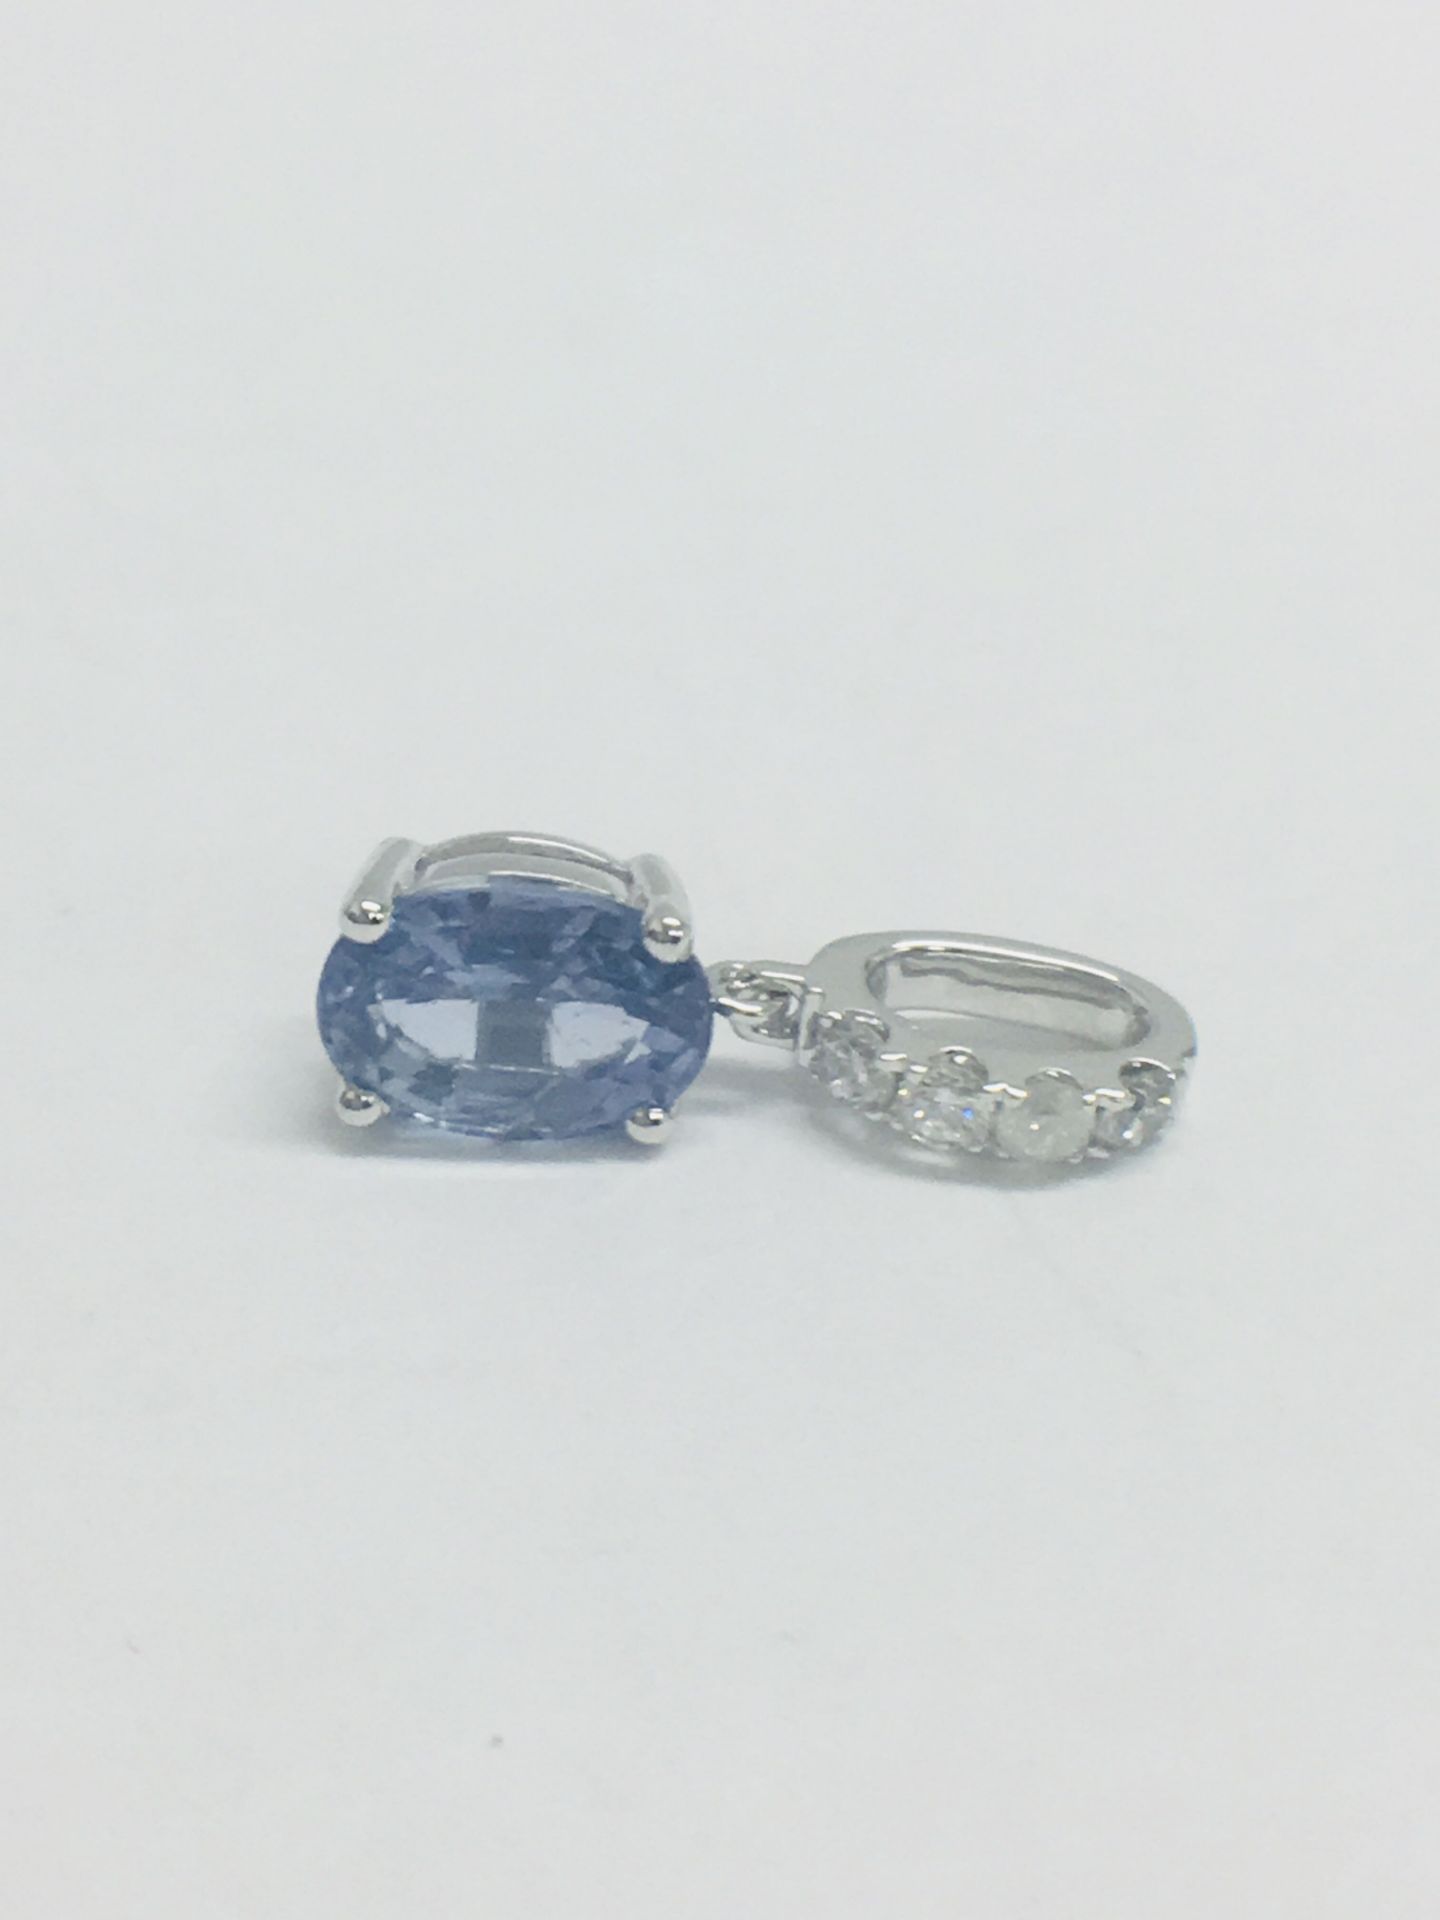 14ct White Gold Sapphire & Diamond Pendant. - Image 3 of 8